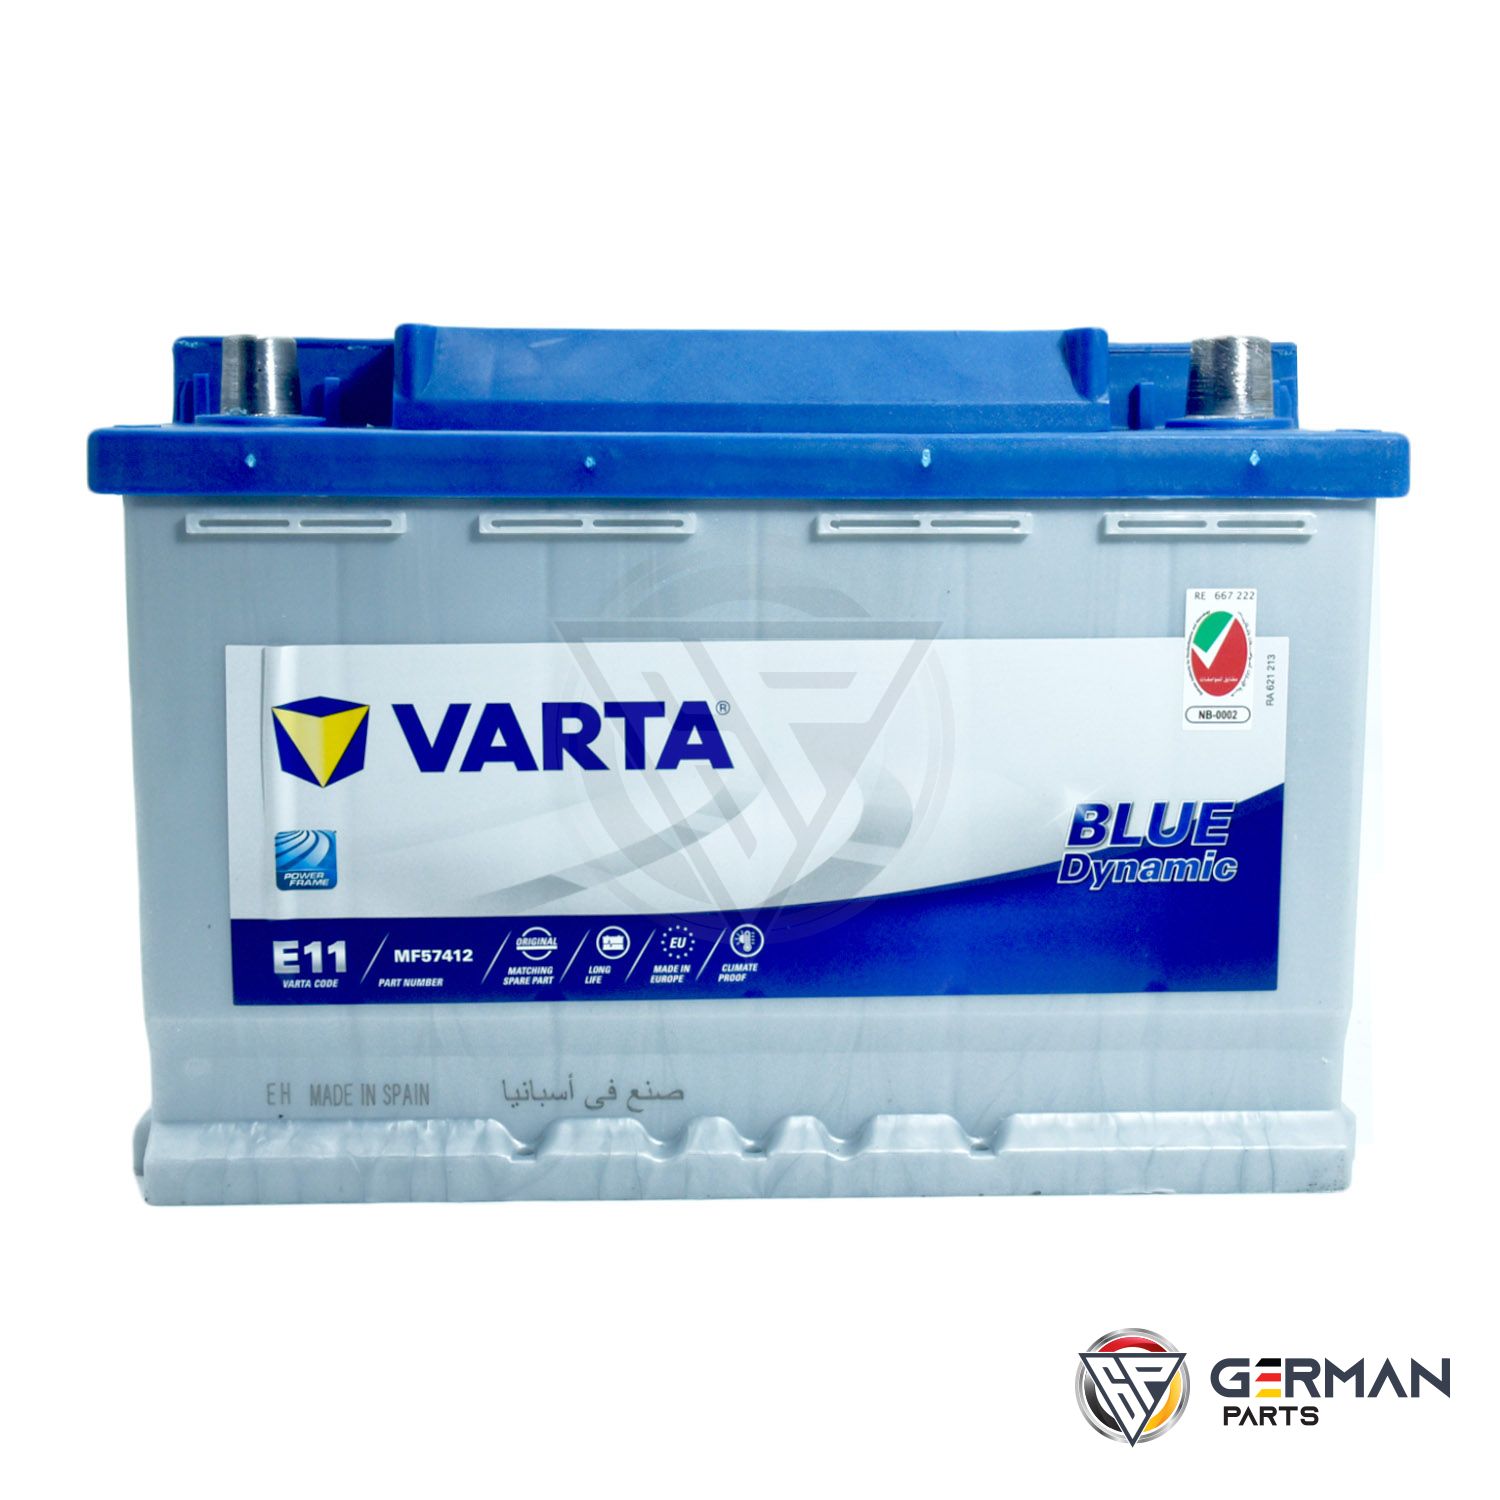 Skuffelse gå på arbejde følgeslutning Buy Varta Battery 74 Ah DIN747MFV-E11 - German Parts